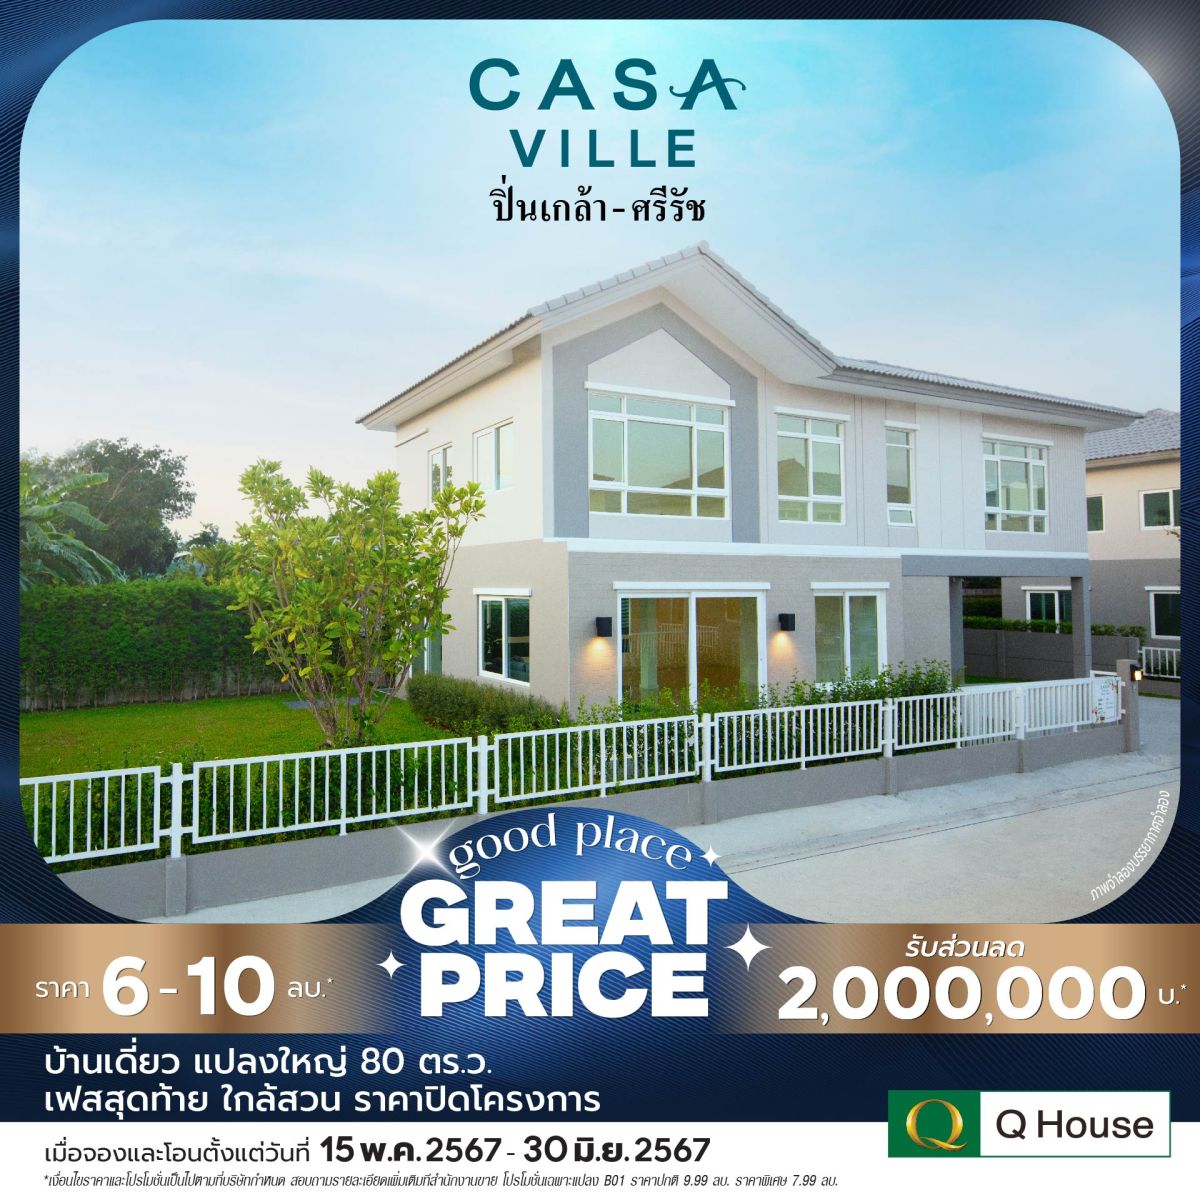 “Q House” กระตุ้นยอดขายโค้งสุดท้าย Q2/67 ขนบ้านเดี่ยว 24 โครงการ จัดแคมเปญ “Good Place Great Price” ลดสูงสุด 2 ลบ.* 